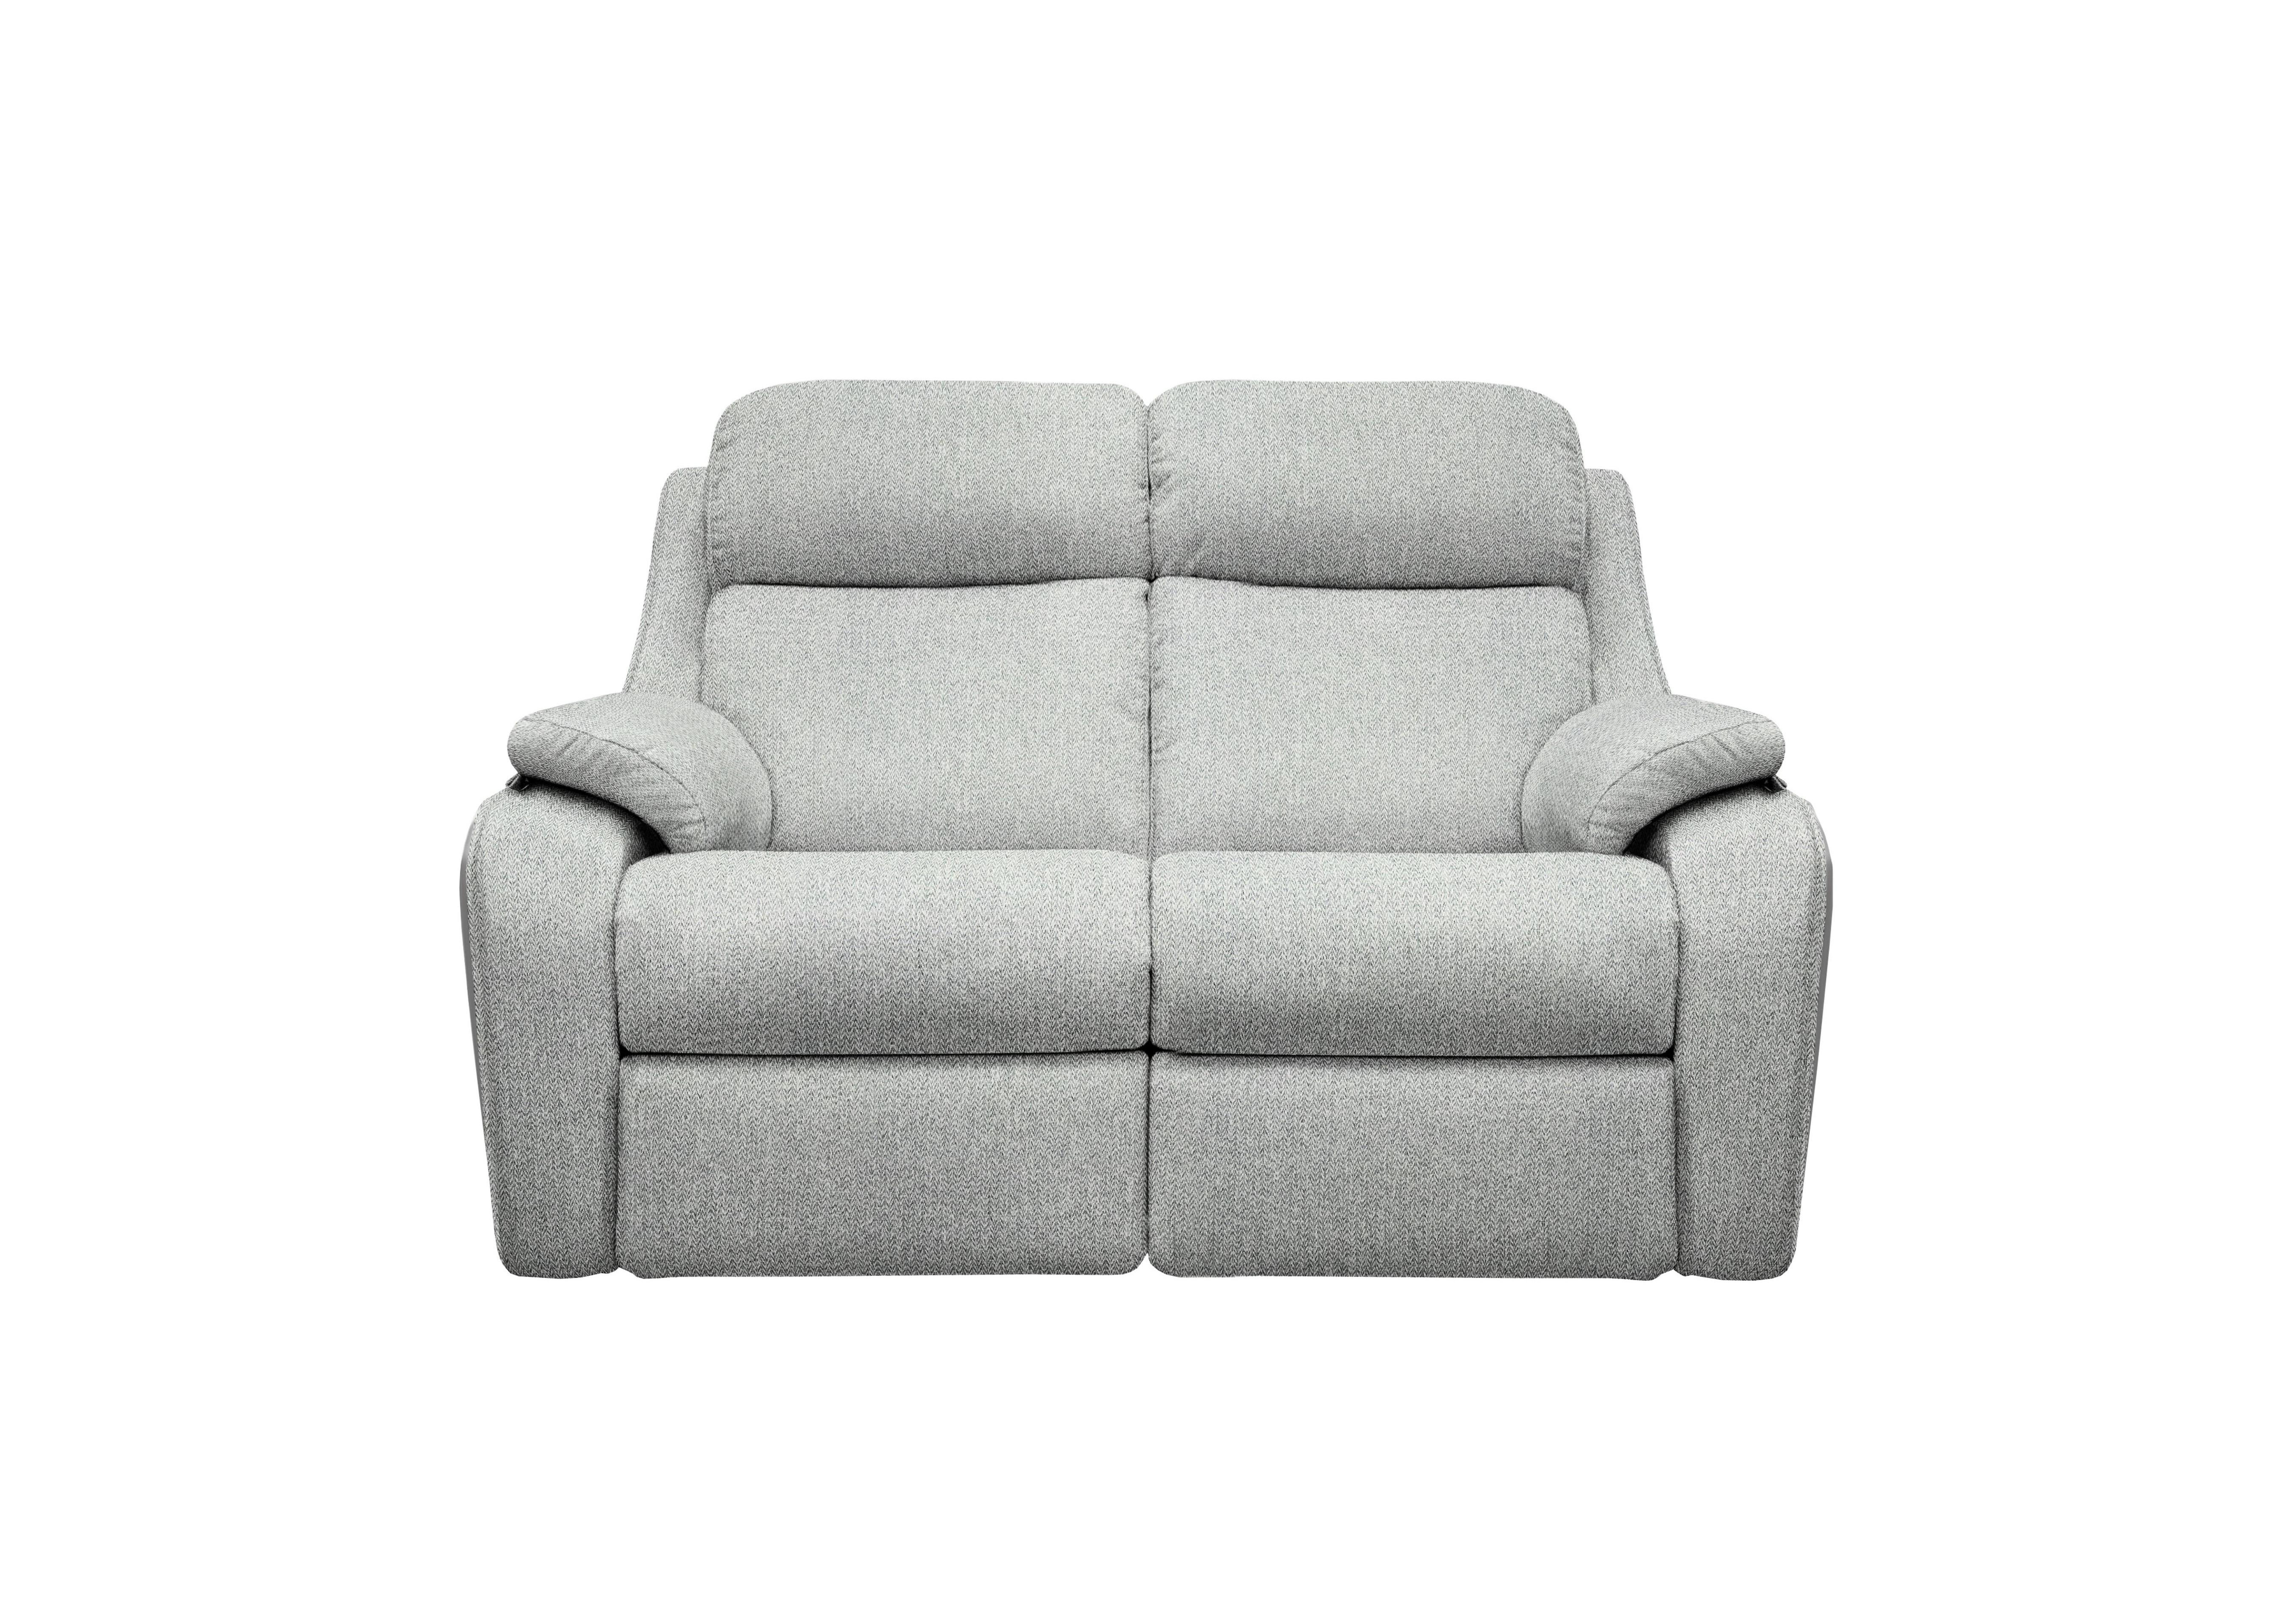 Kingsbury 2 Seater Fabric Sofa in A011 Swift Cygnet on Furniture Village